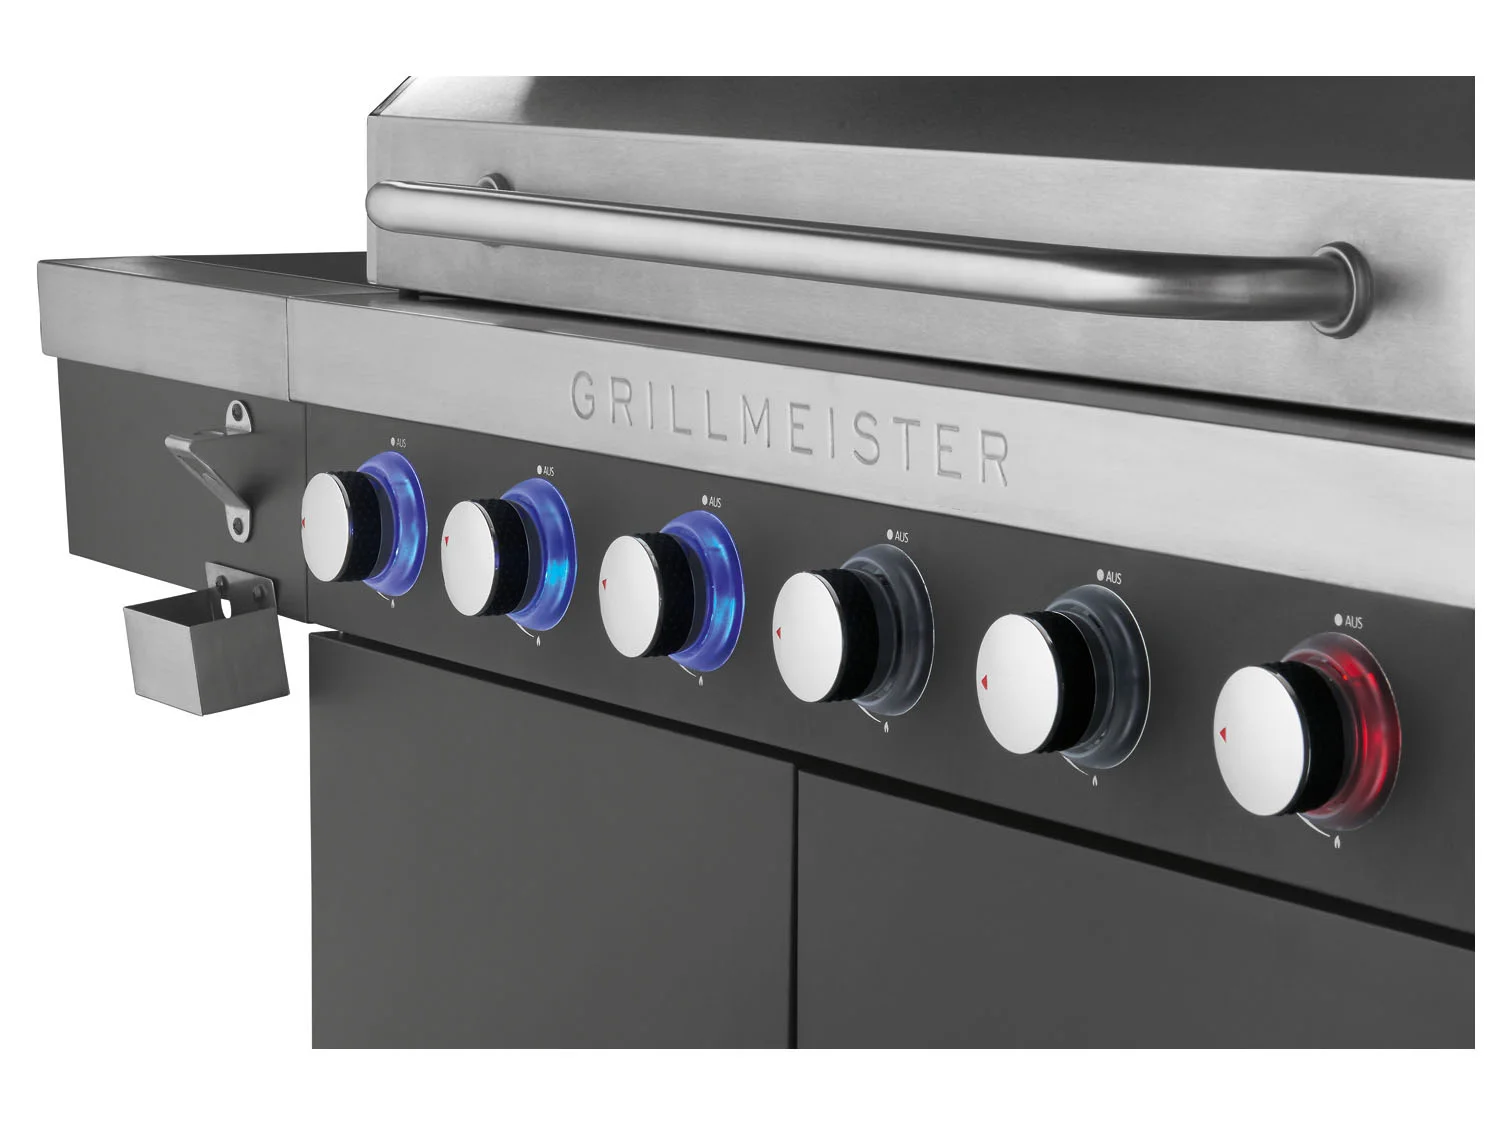 GRILLMEISTER gas grill, 6plus1 burner, 26.1 kW - LIDL